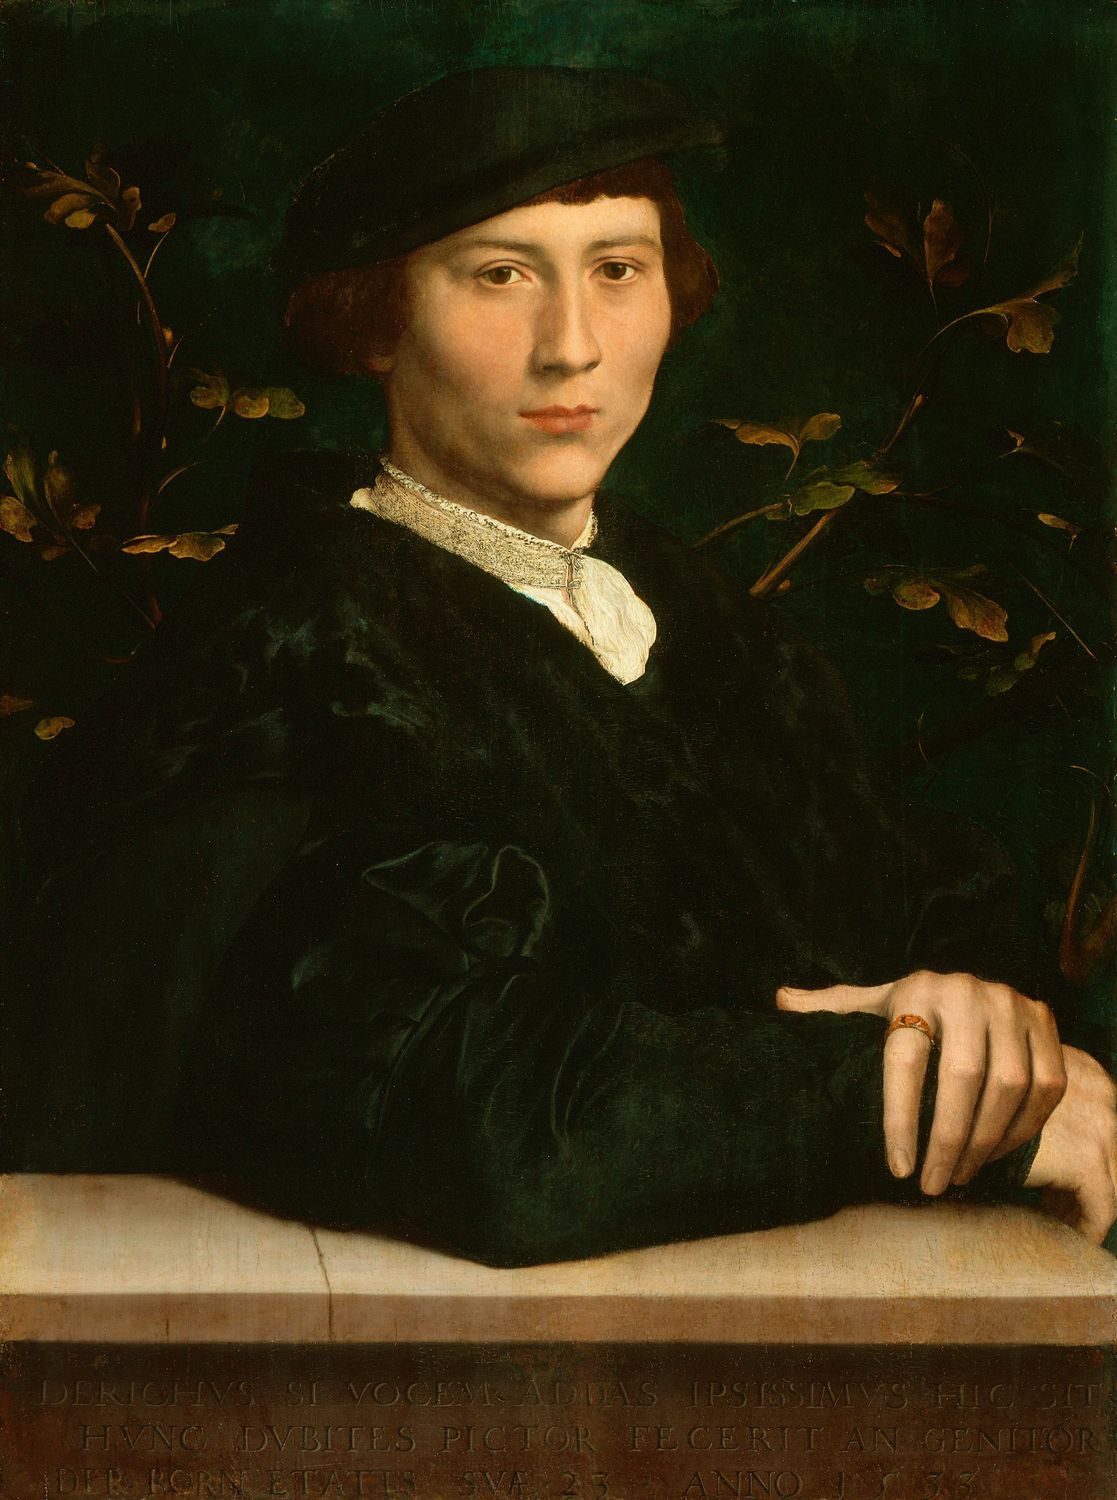 HOT RENAISSANCE MEN: Hans Holbein the Younger - Derich Born